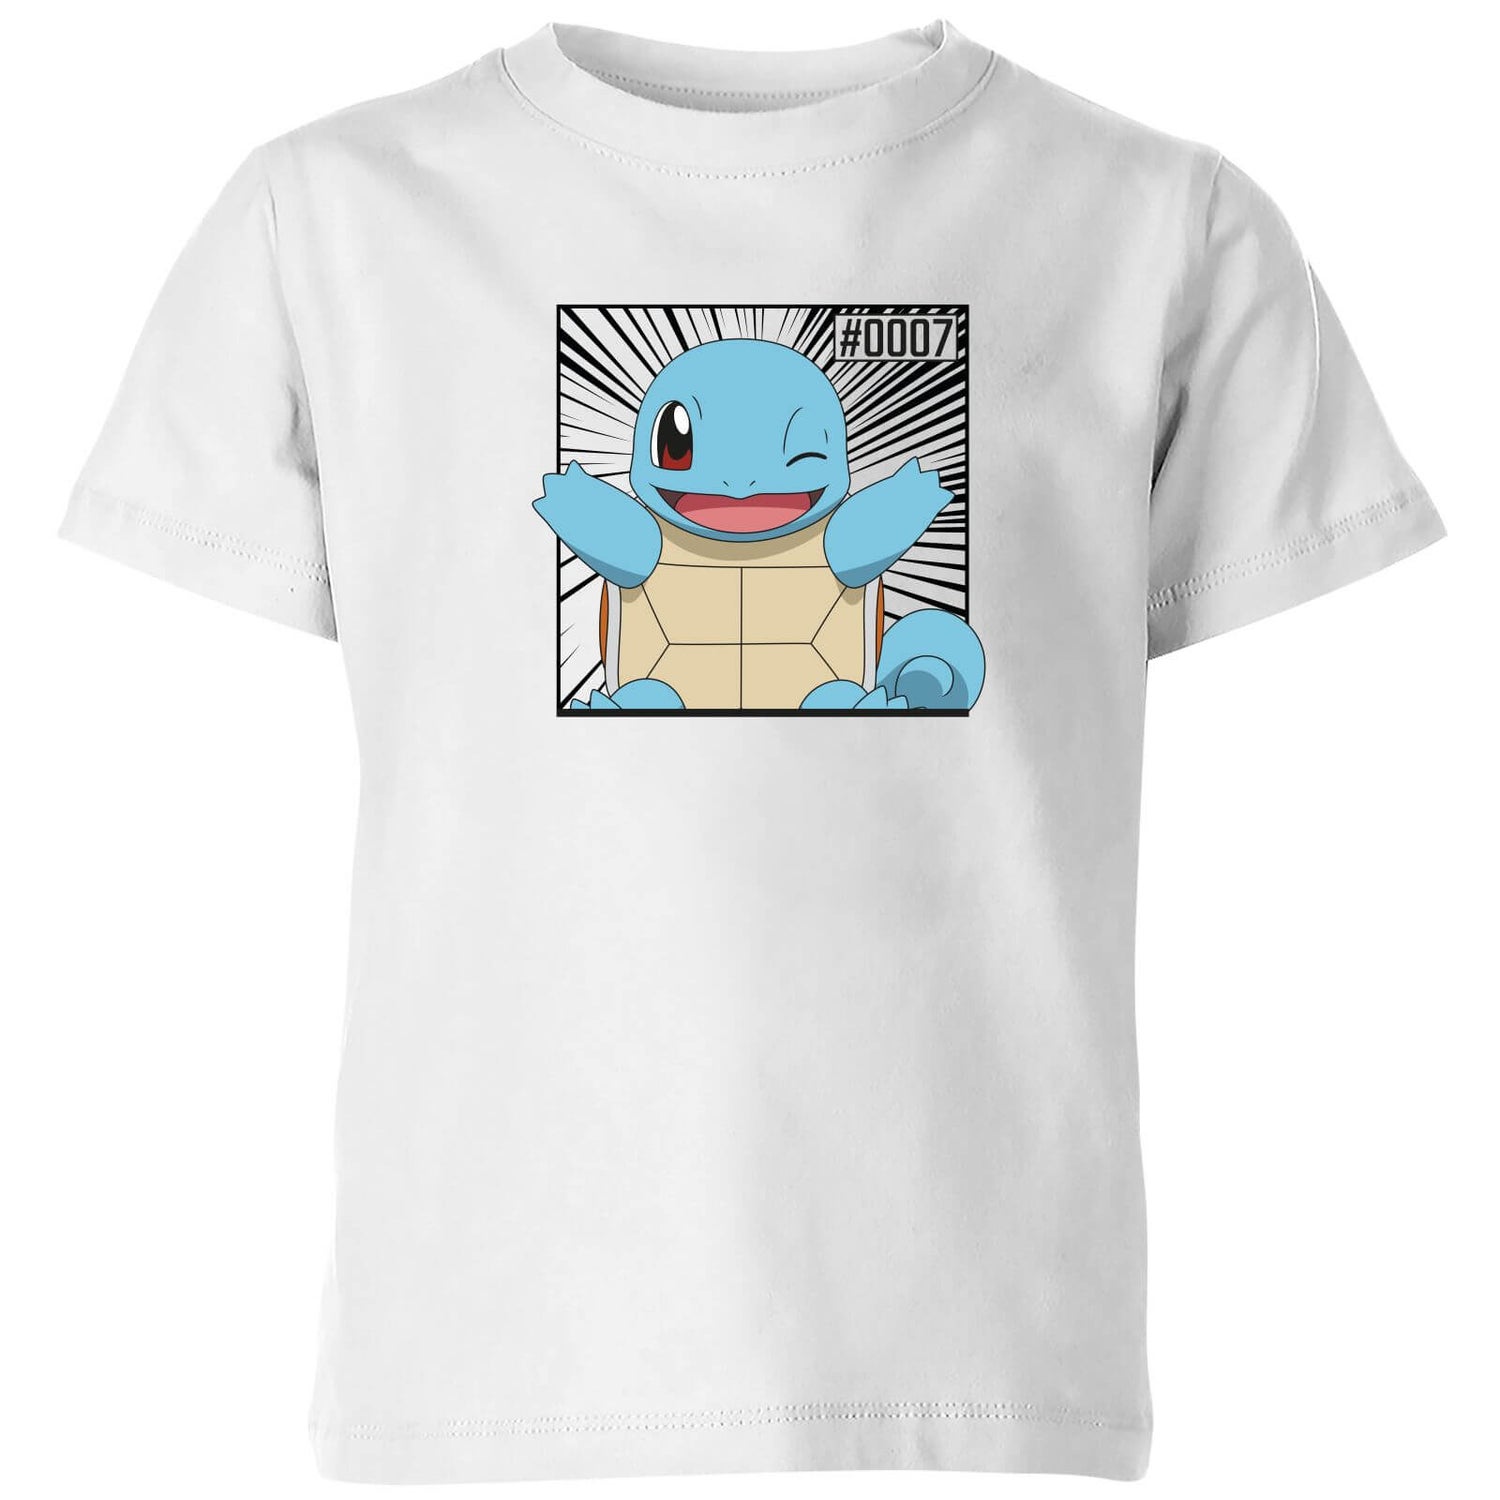 Pokémon Pokédex Squirtle #0007 Camiseta Niño - Blanco